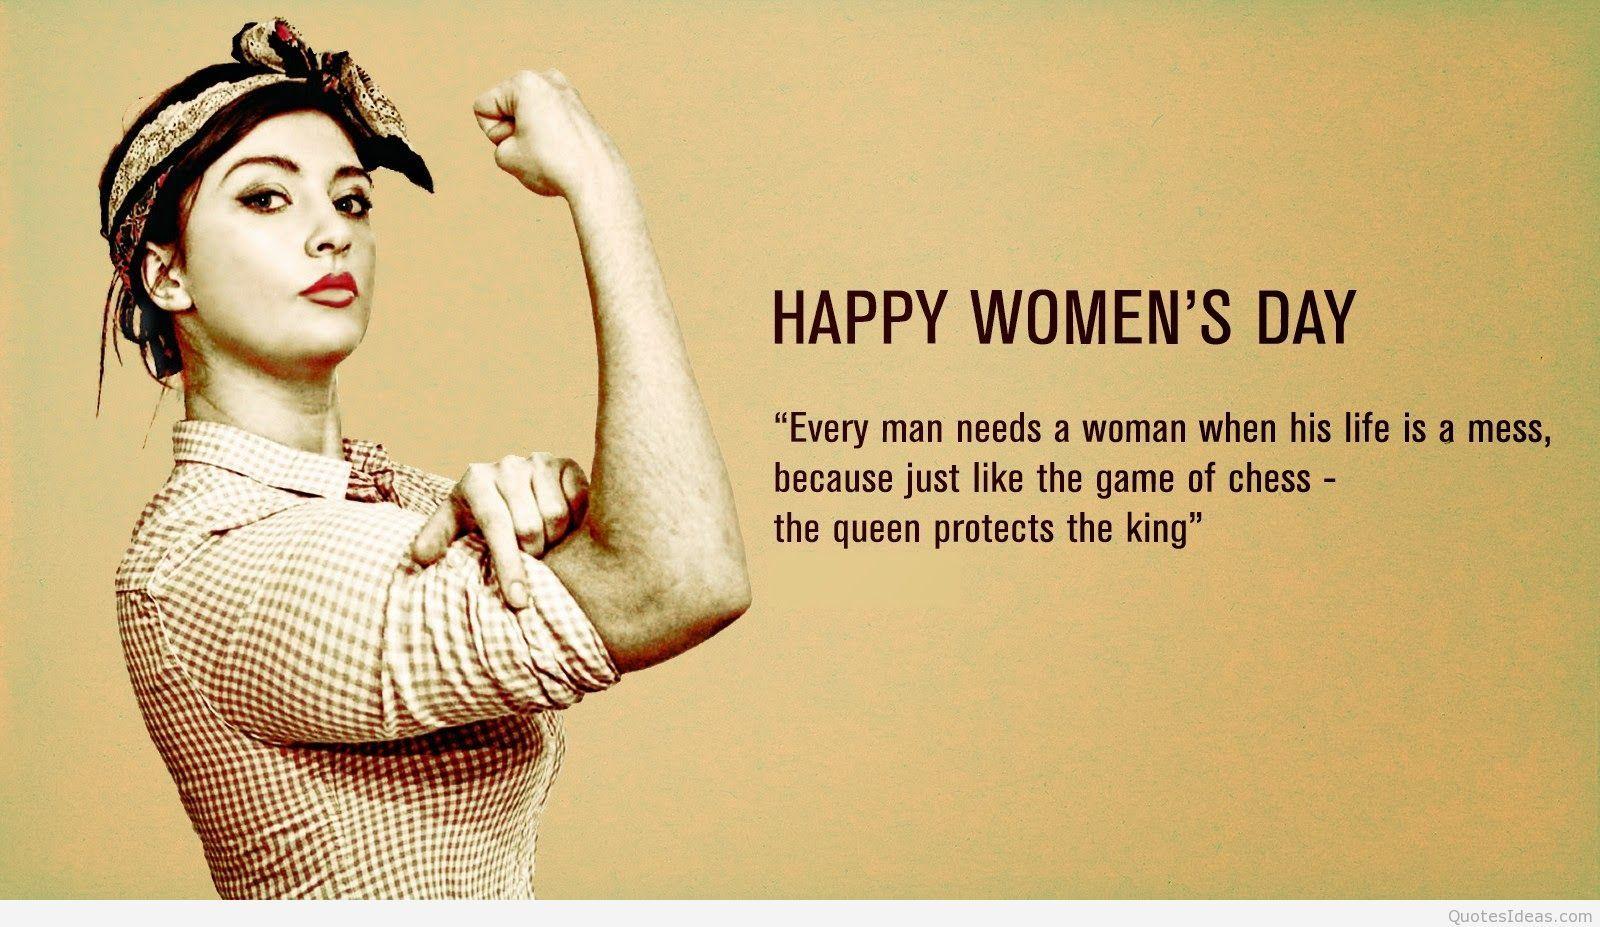 Happy Women's day wallpaper quotes 2015 2016